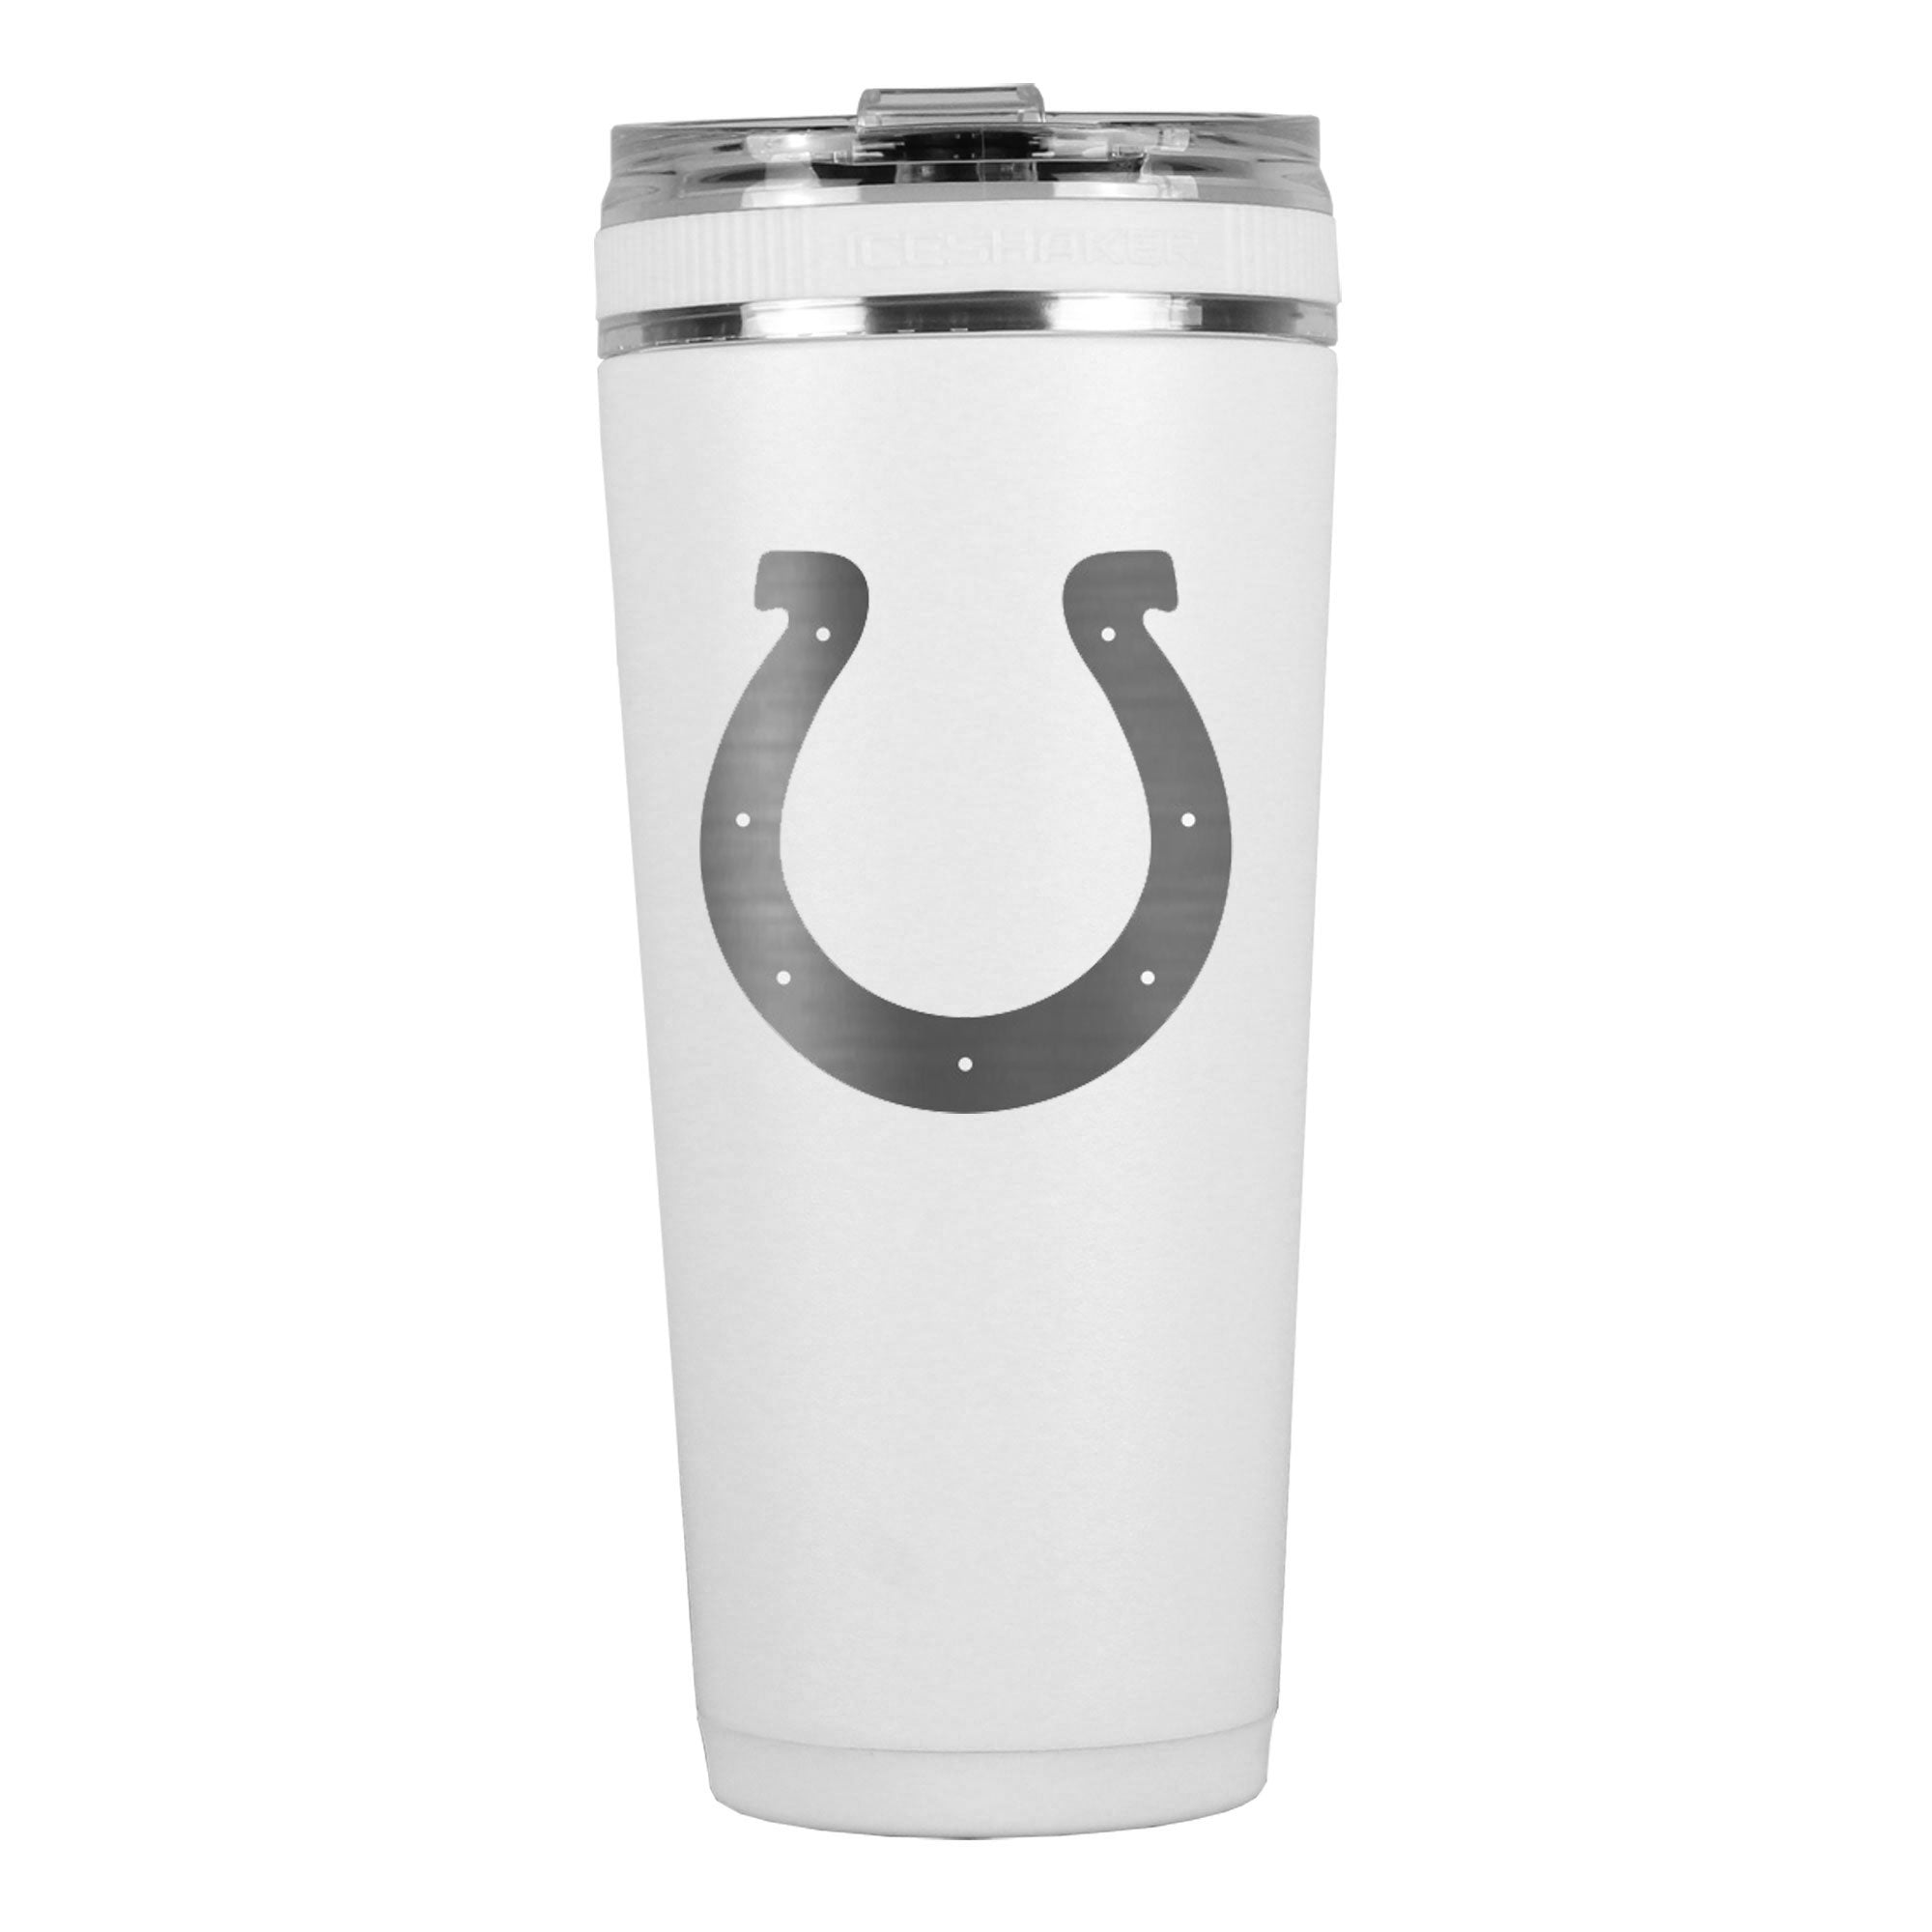 Indianapolis Colts 15 oz. White Mug